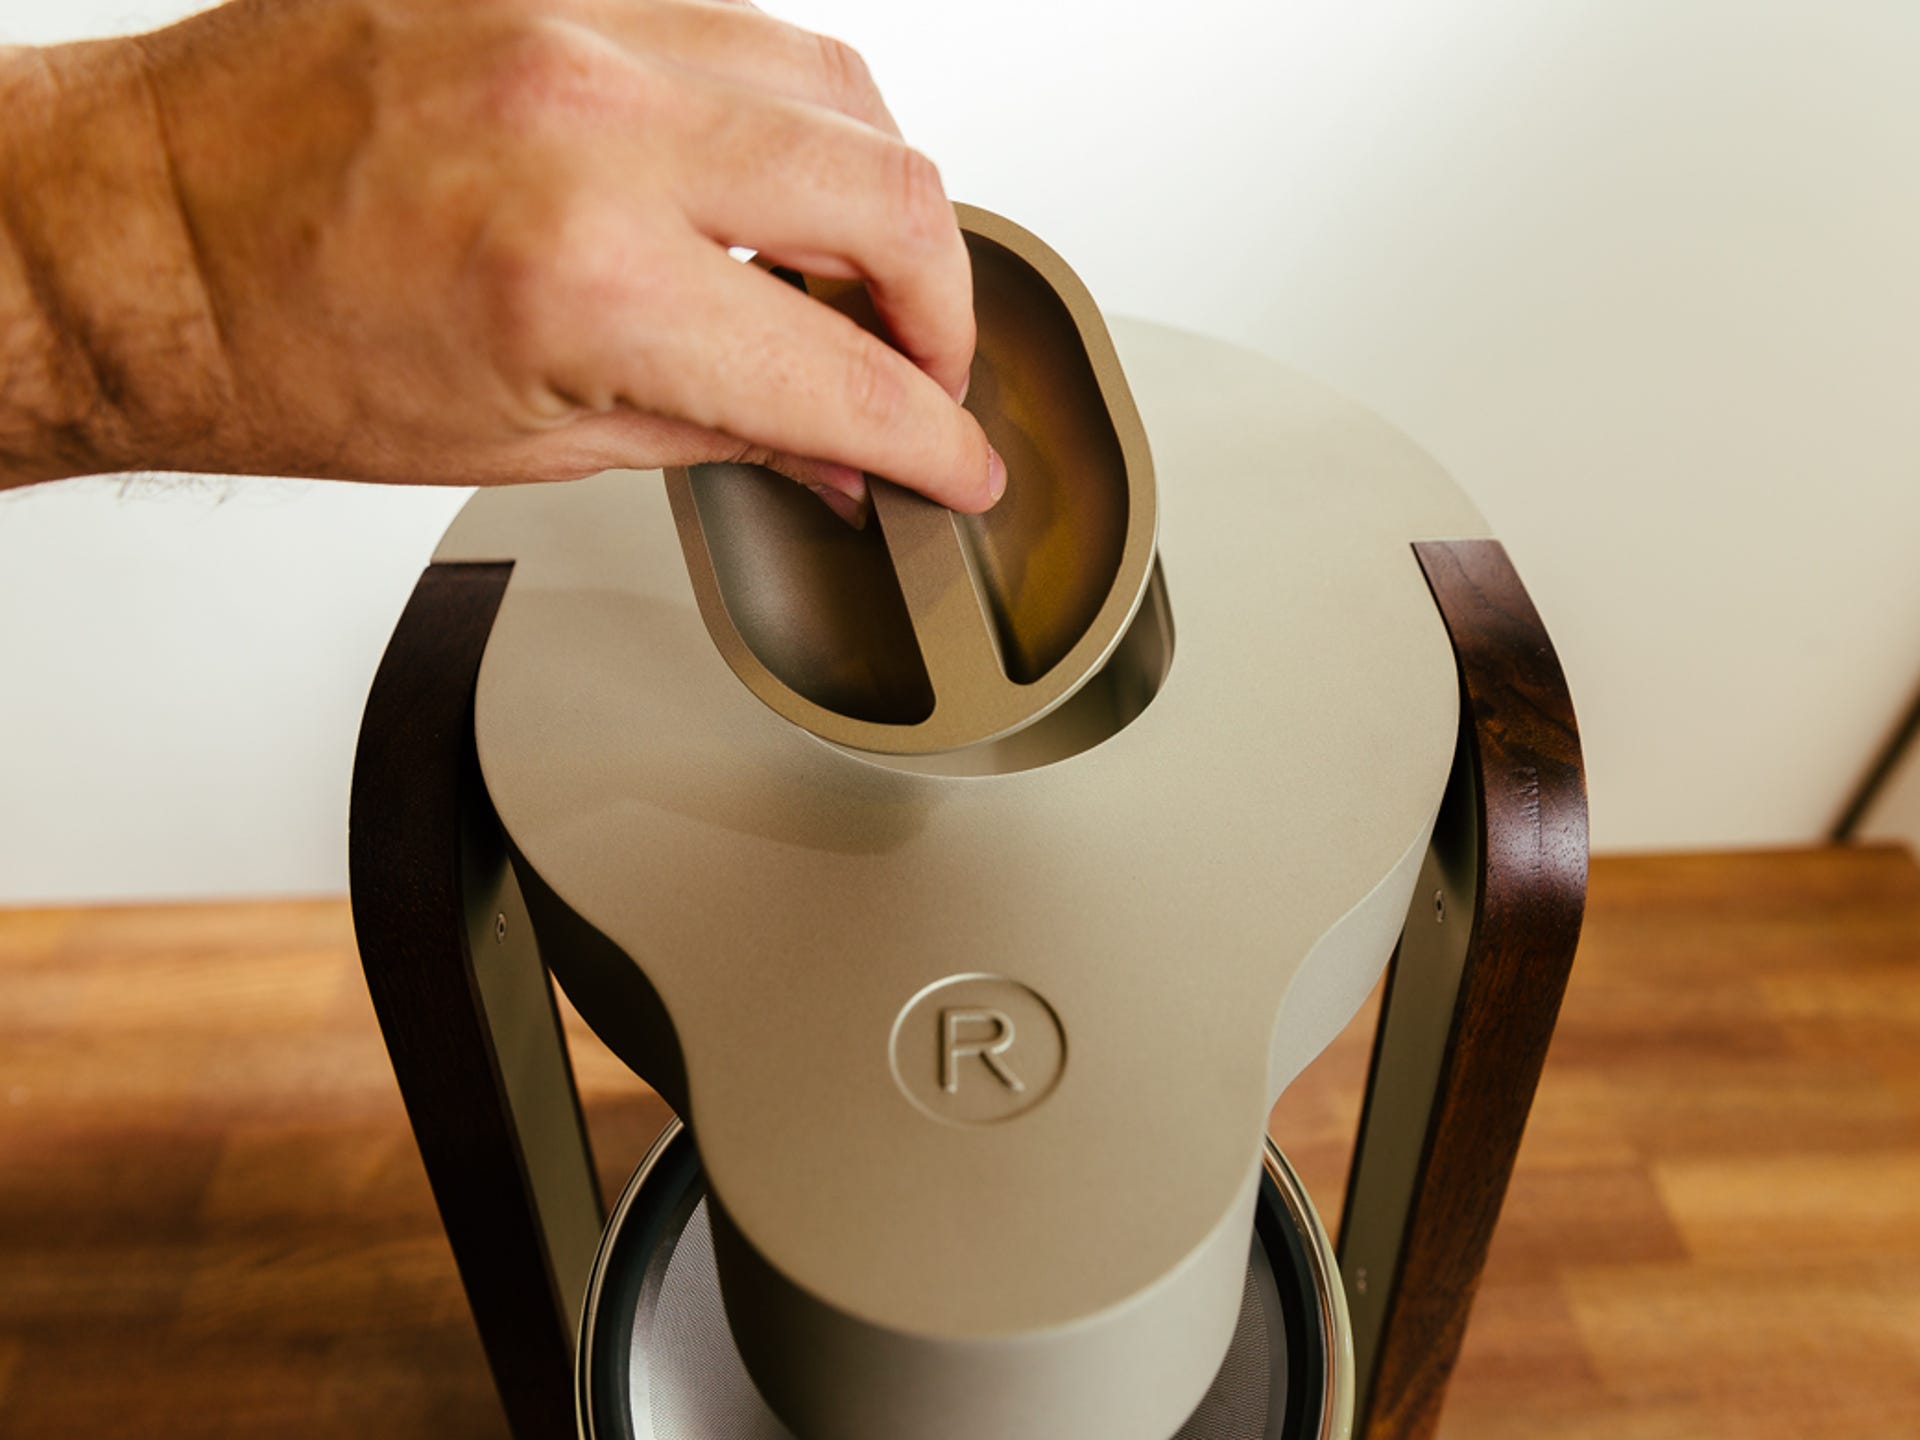 ratio-coffee-maker-product-photos-8.jpg